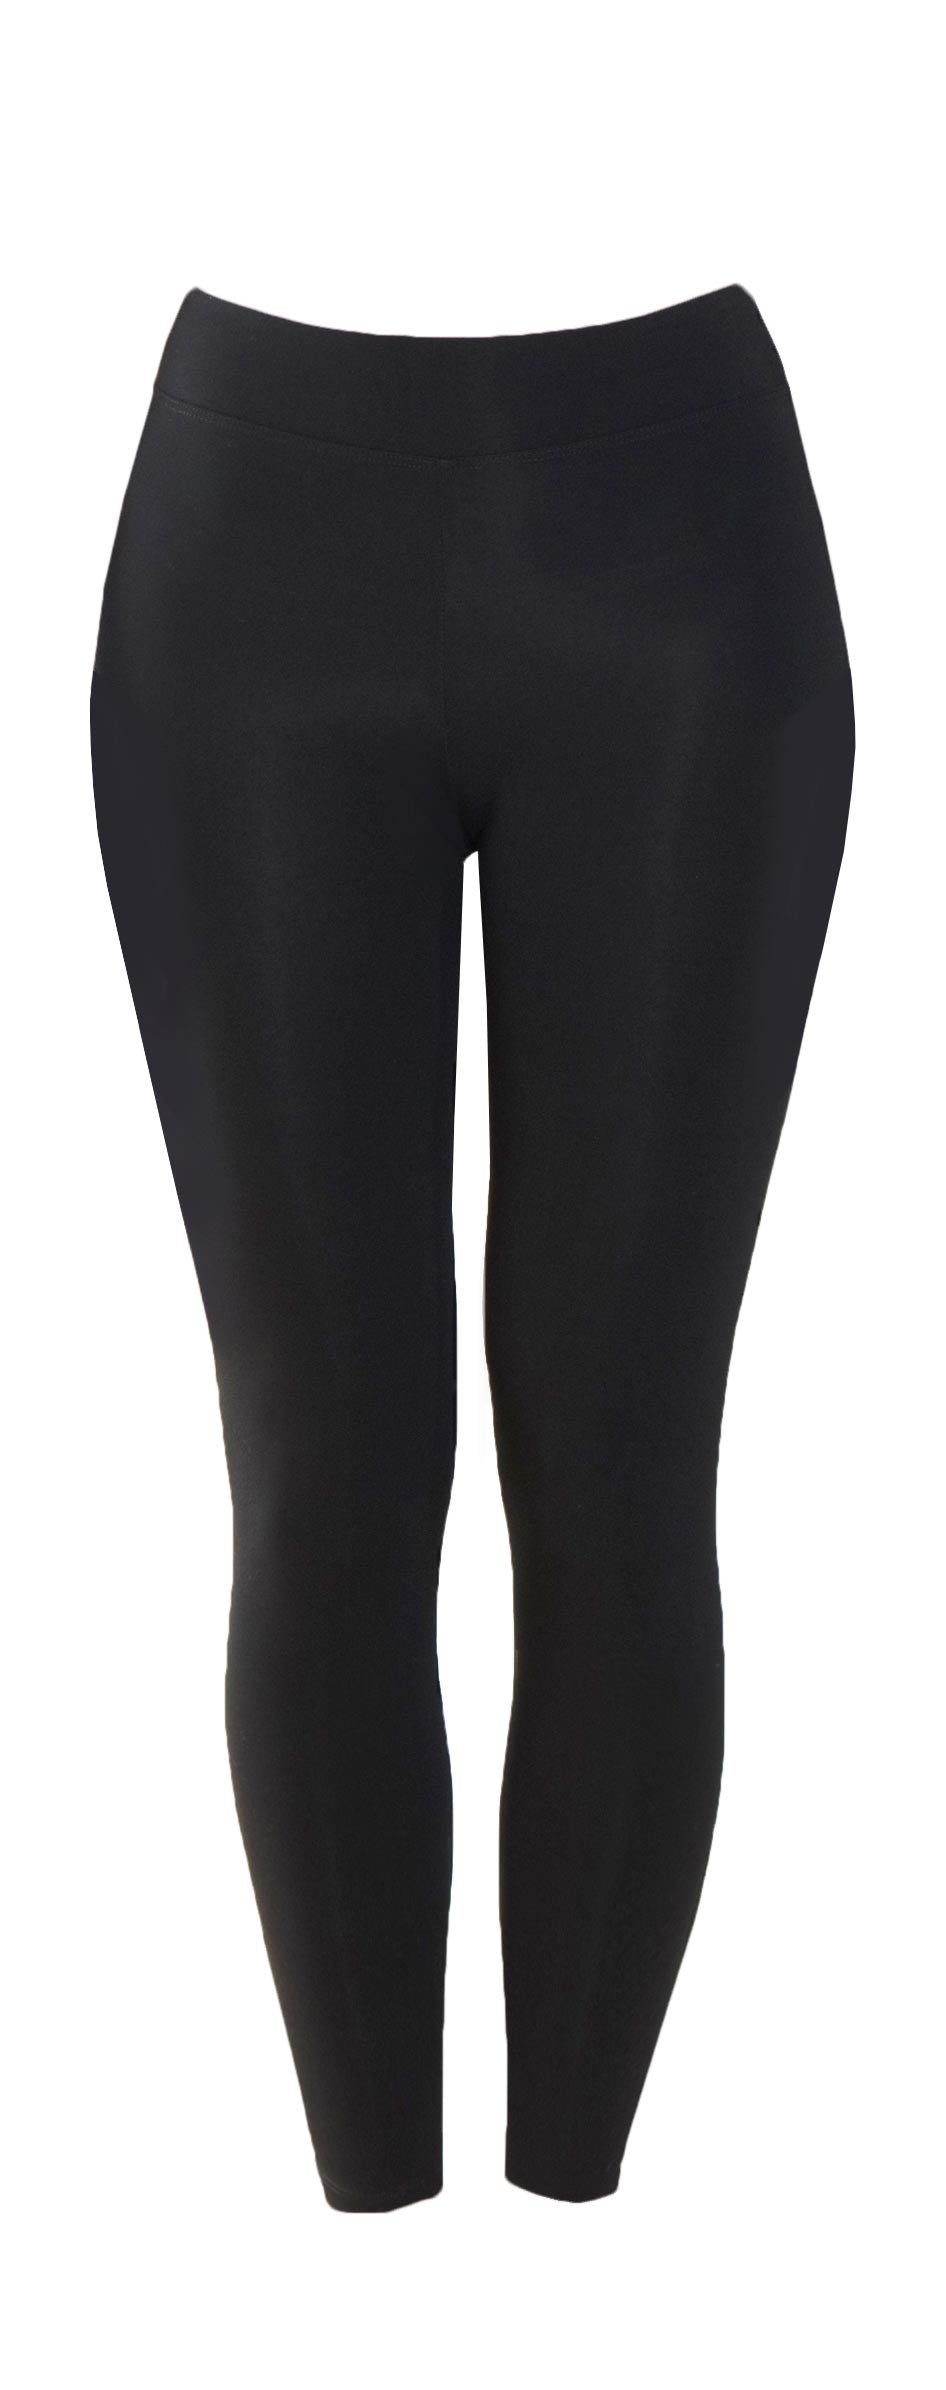 Lucy Powermax Lotus Collection Black Capri Yoga Leggings Pants Womens Size  Small